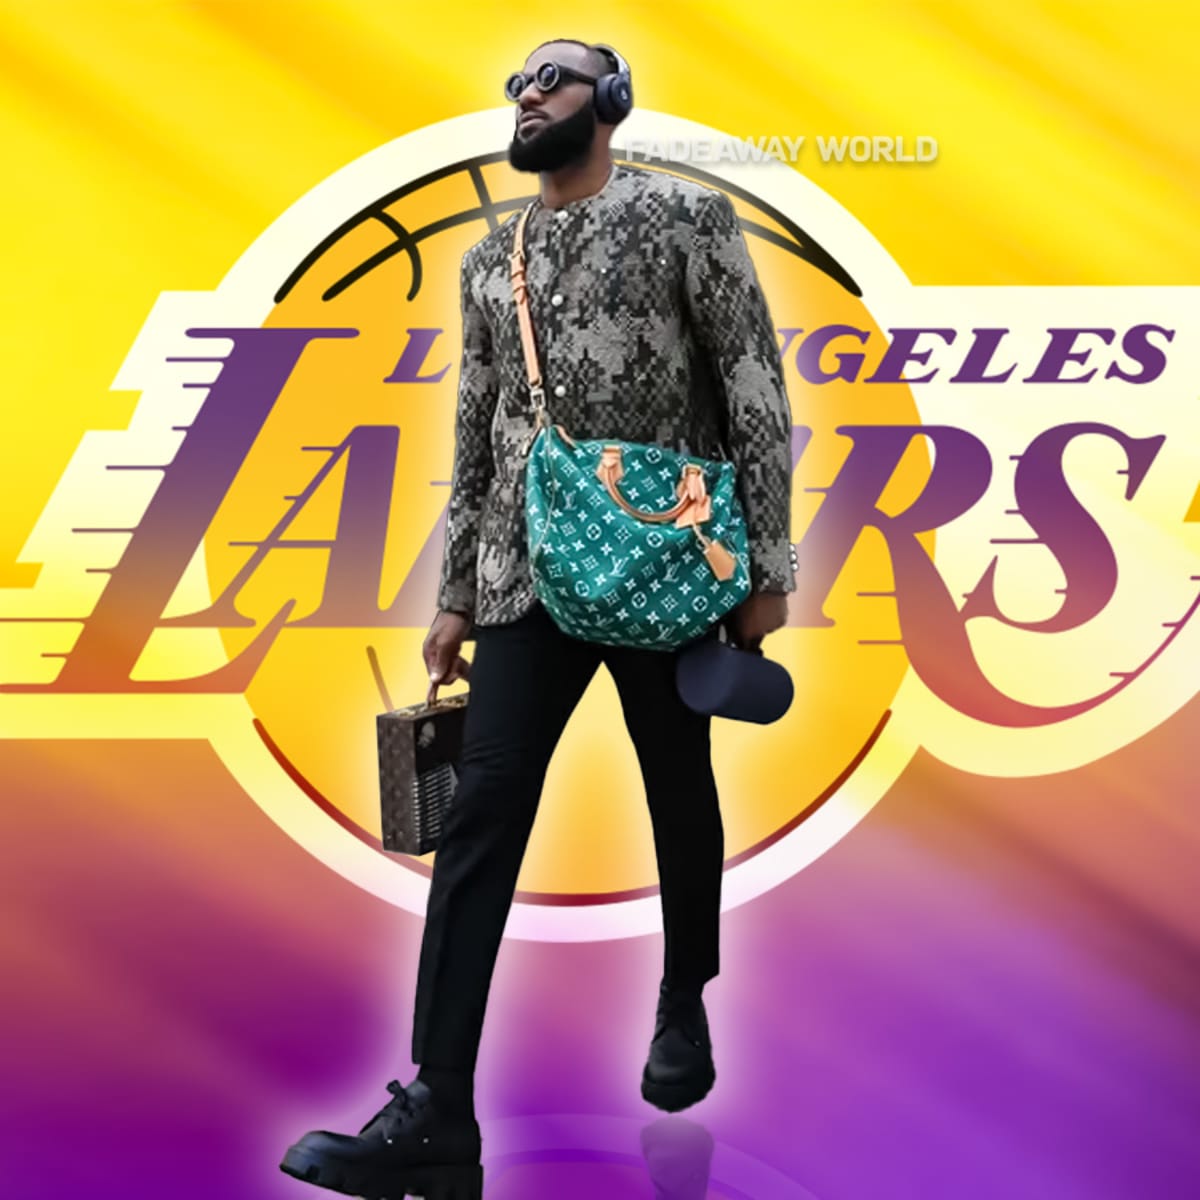 LeBron James' Louis Vuitton outfit for Lakers' season opener vs